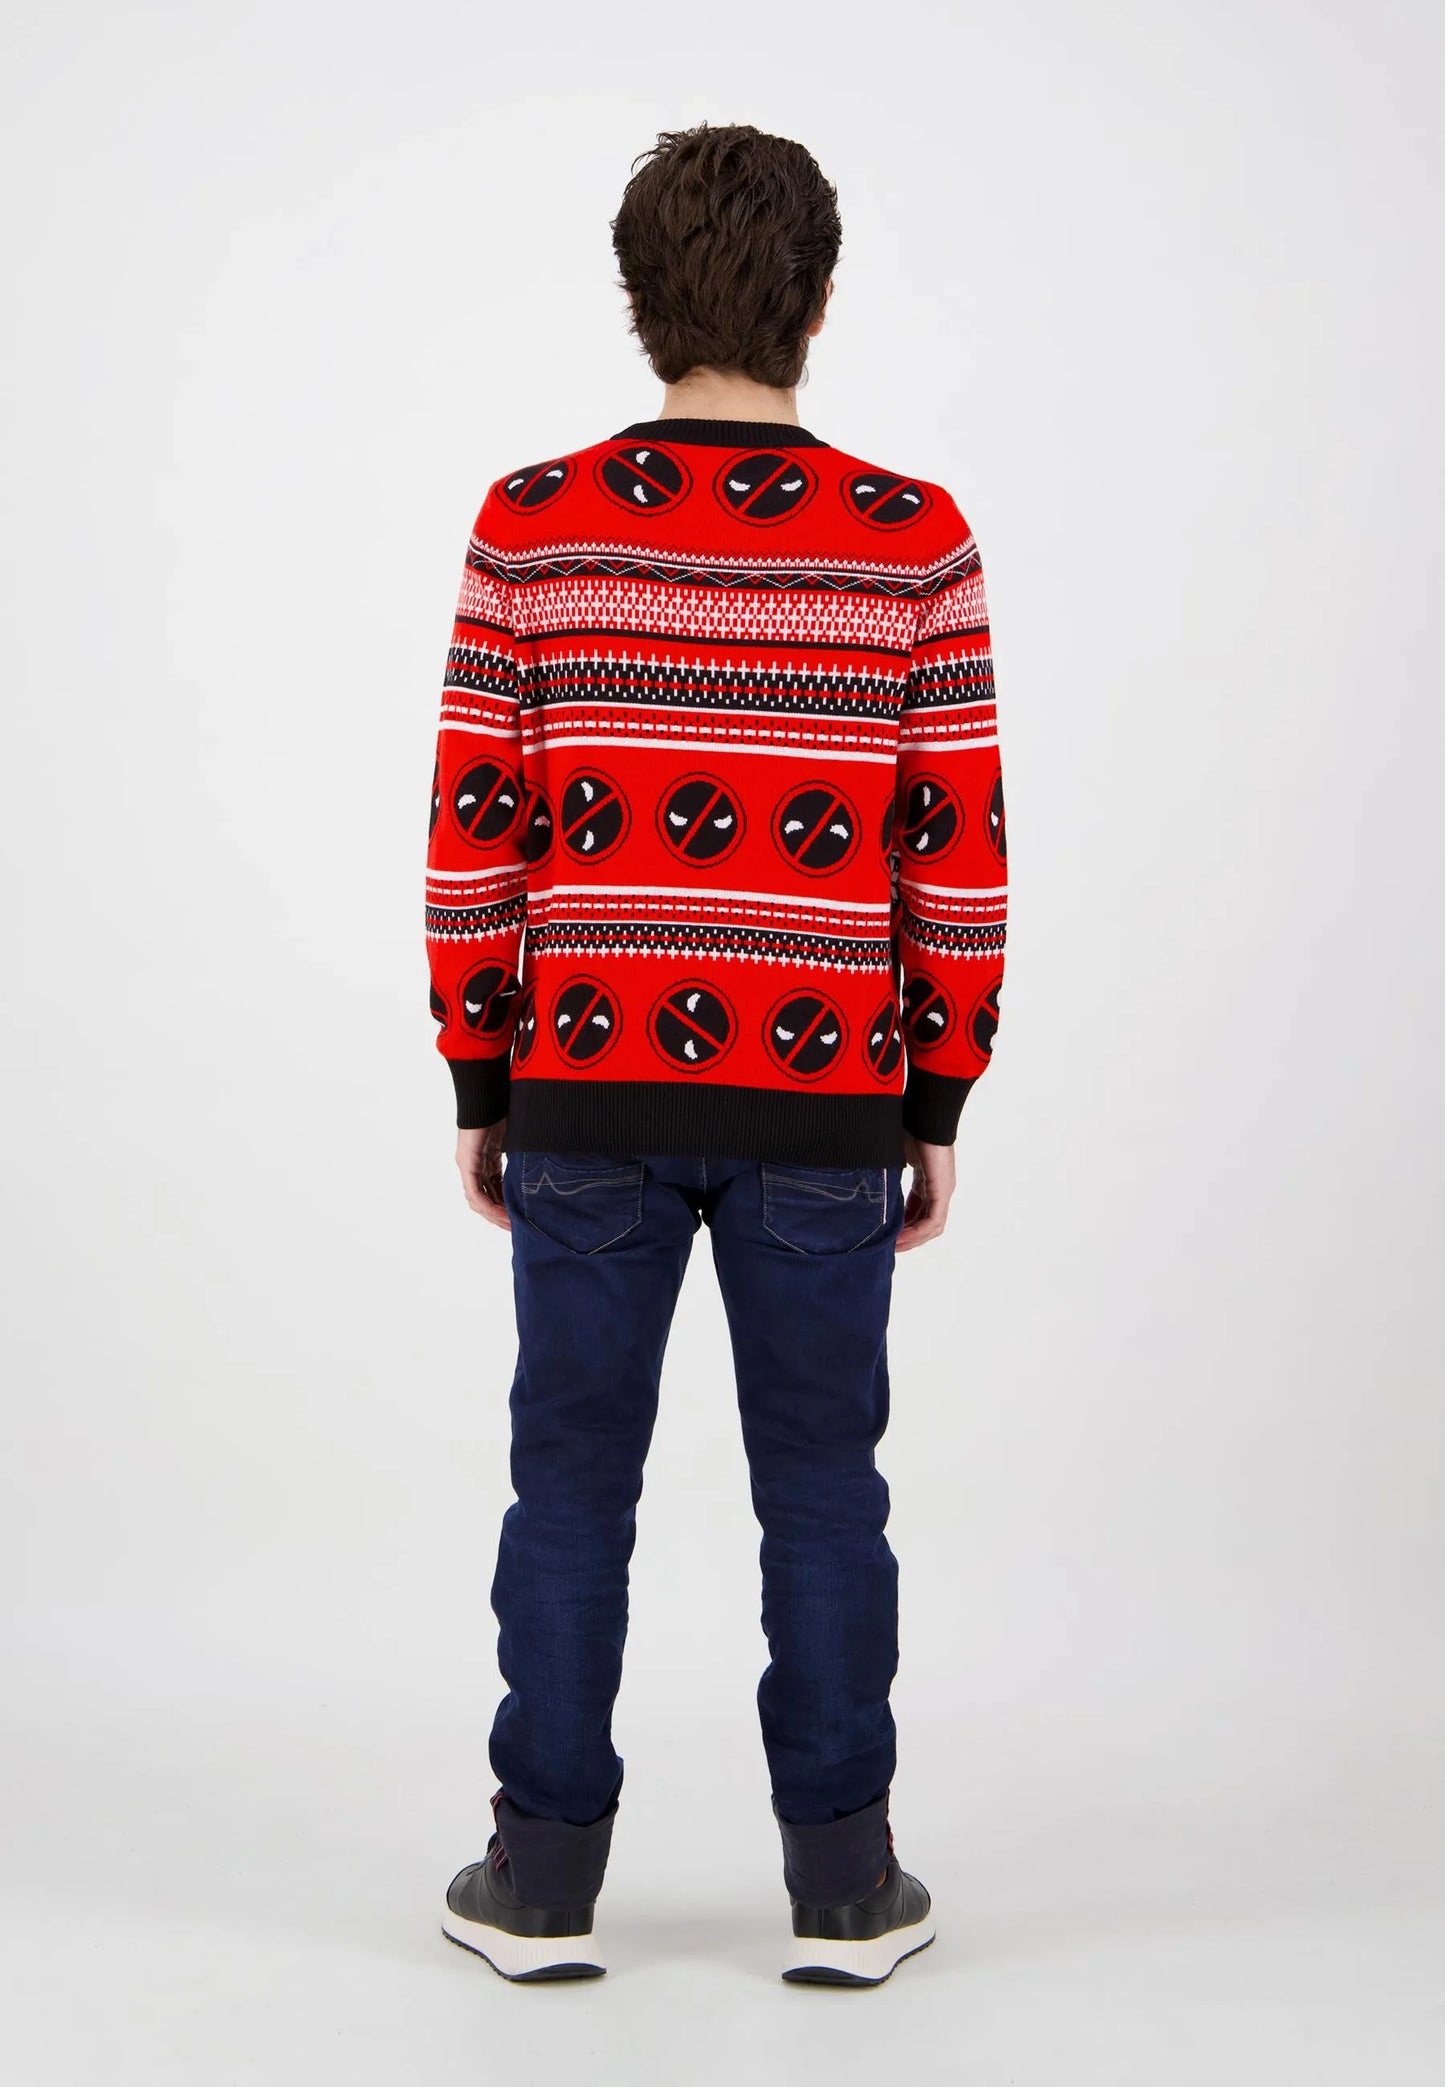 Deadpool Christmas Sweater "Here Comes Deadpool" 